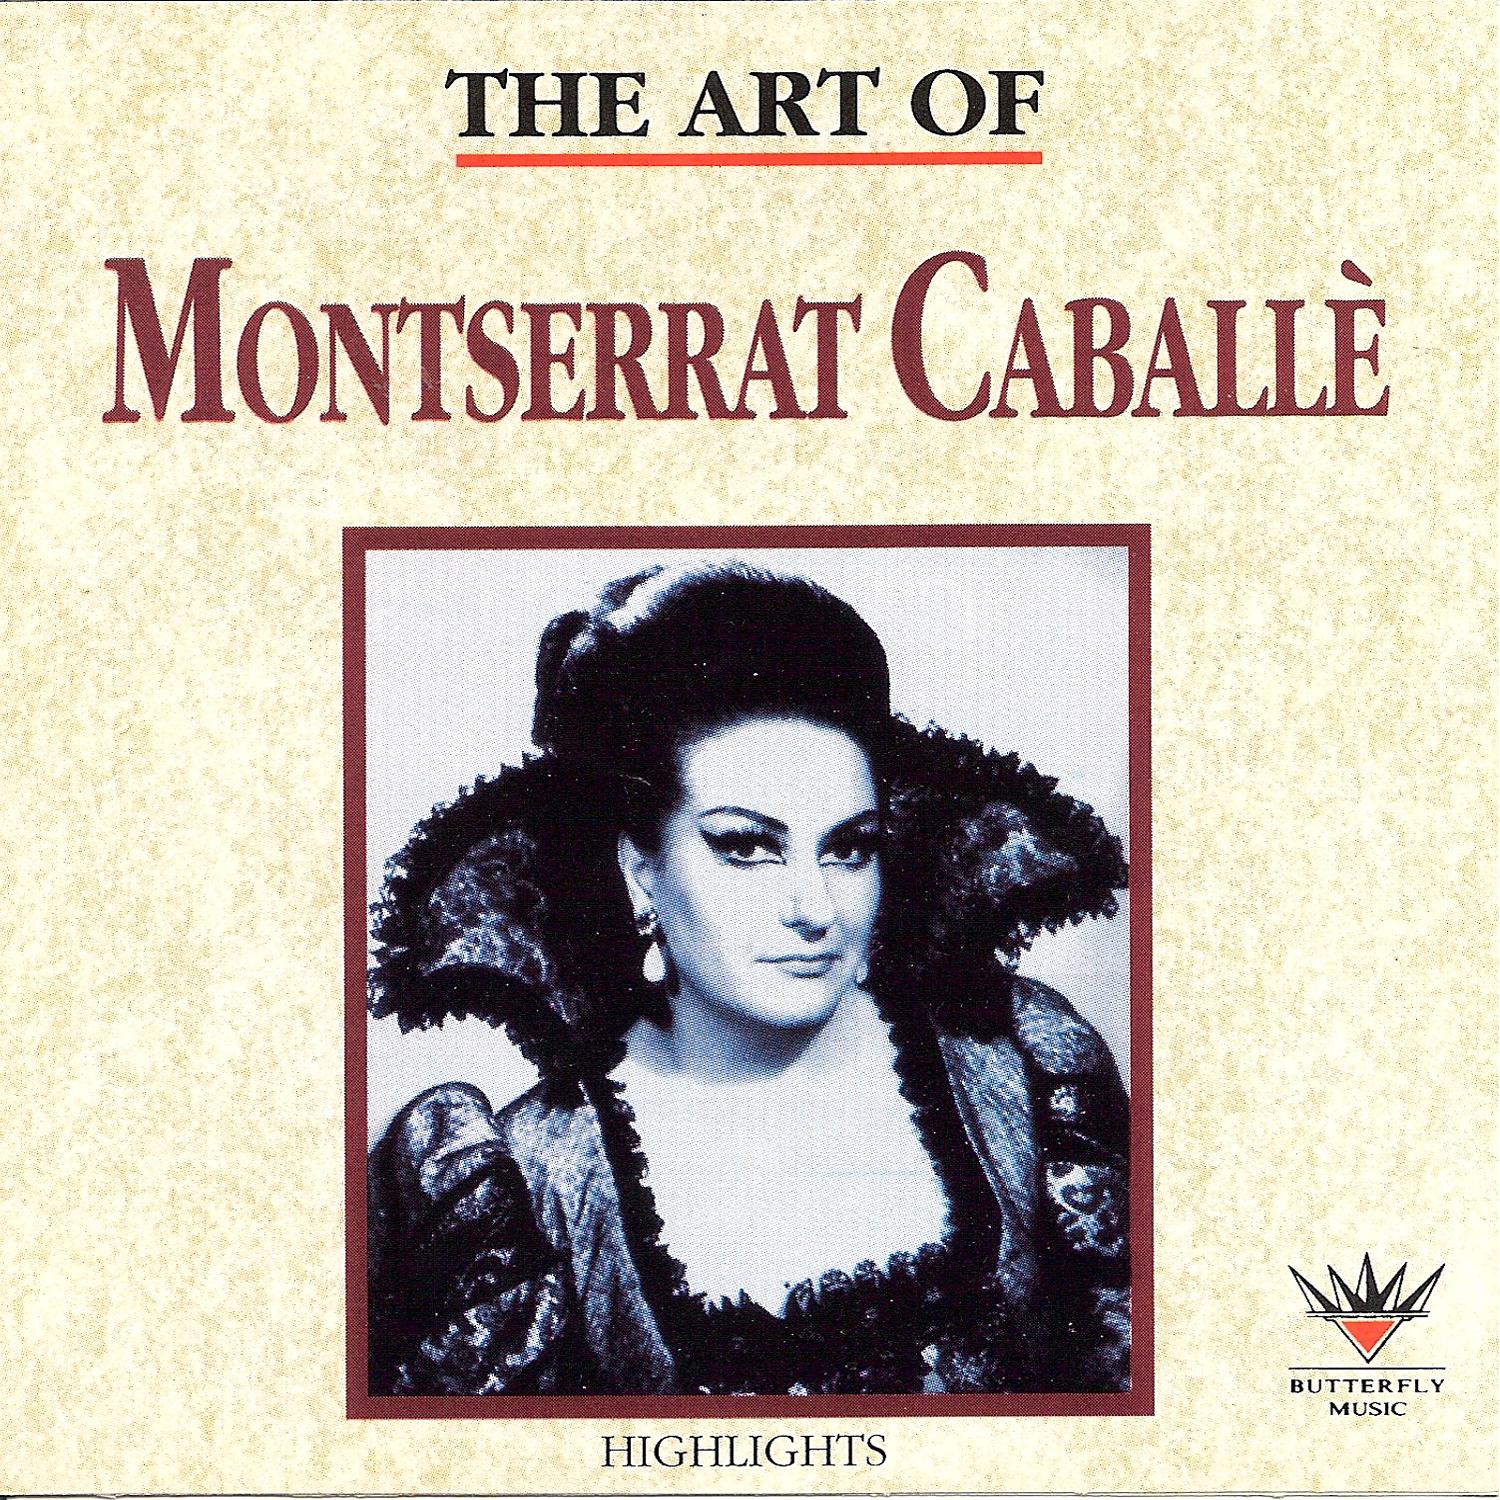 The Art of Montserrat Caballe